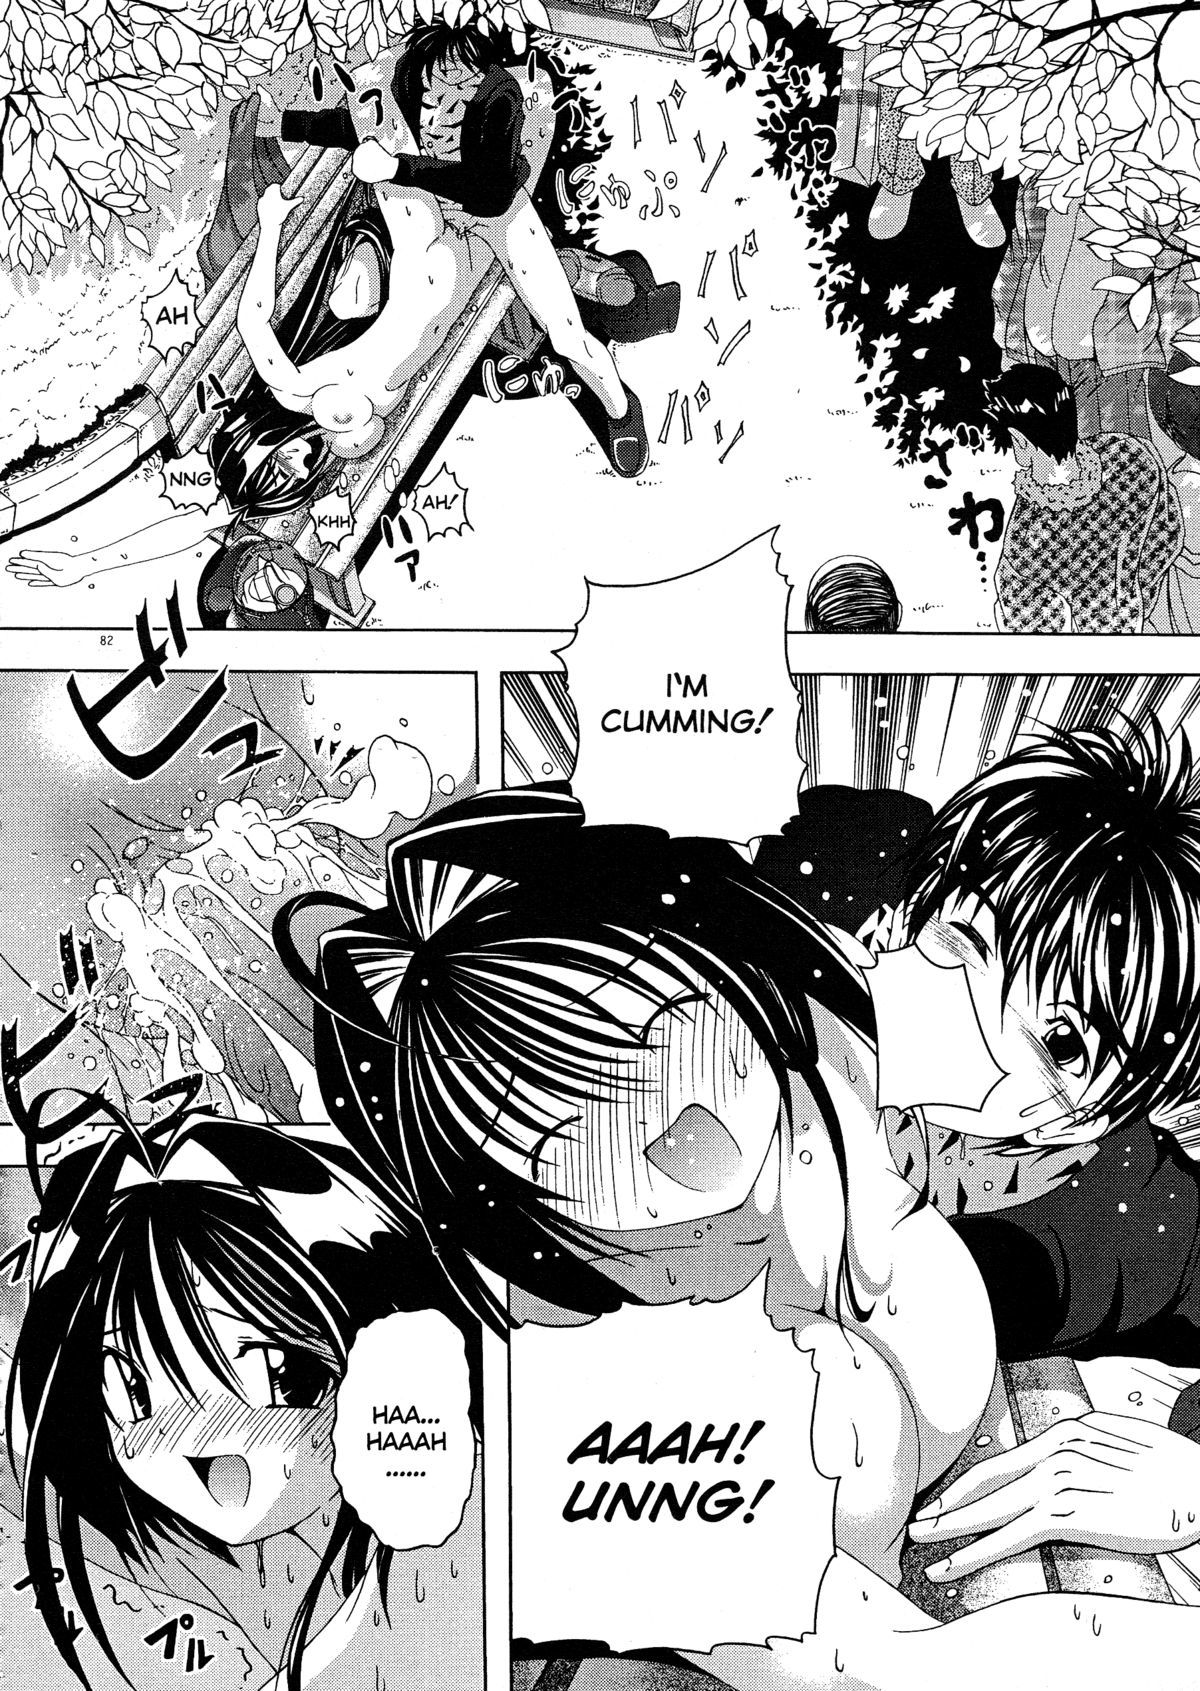 Flashbang!Hi-res 82 hentai manga